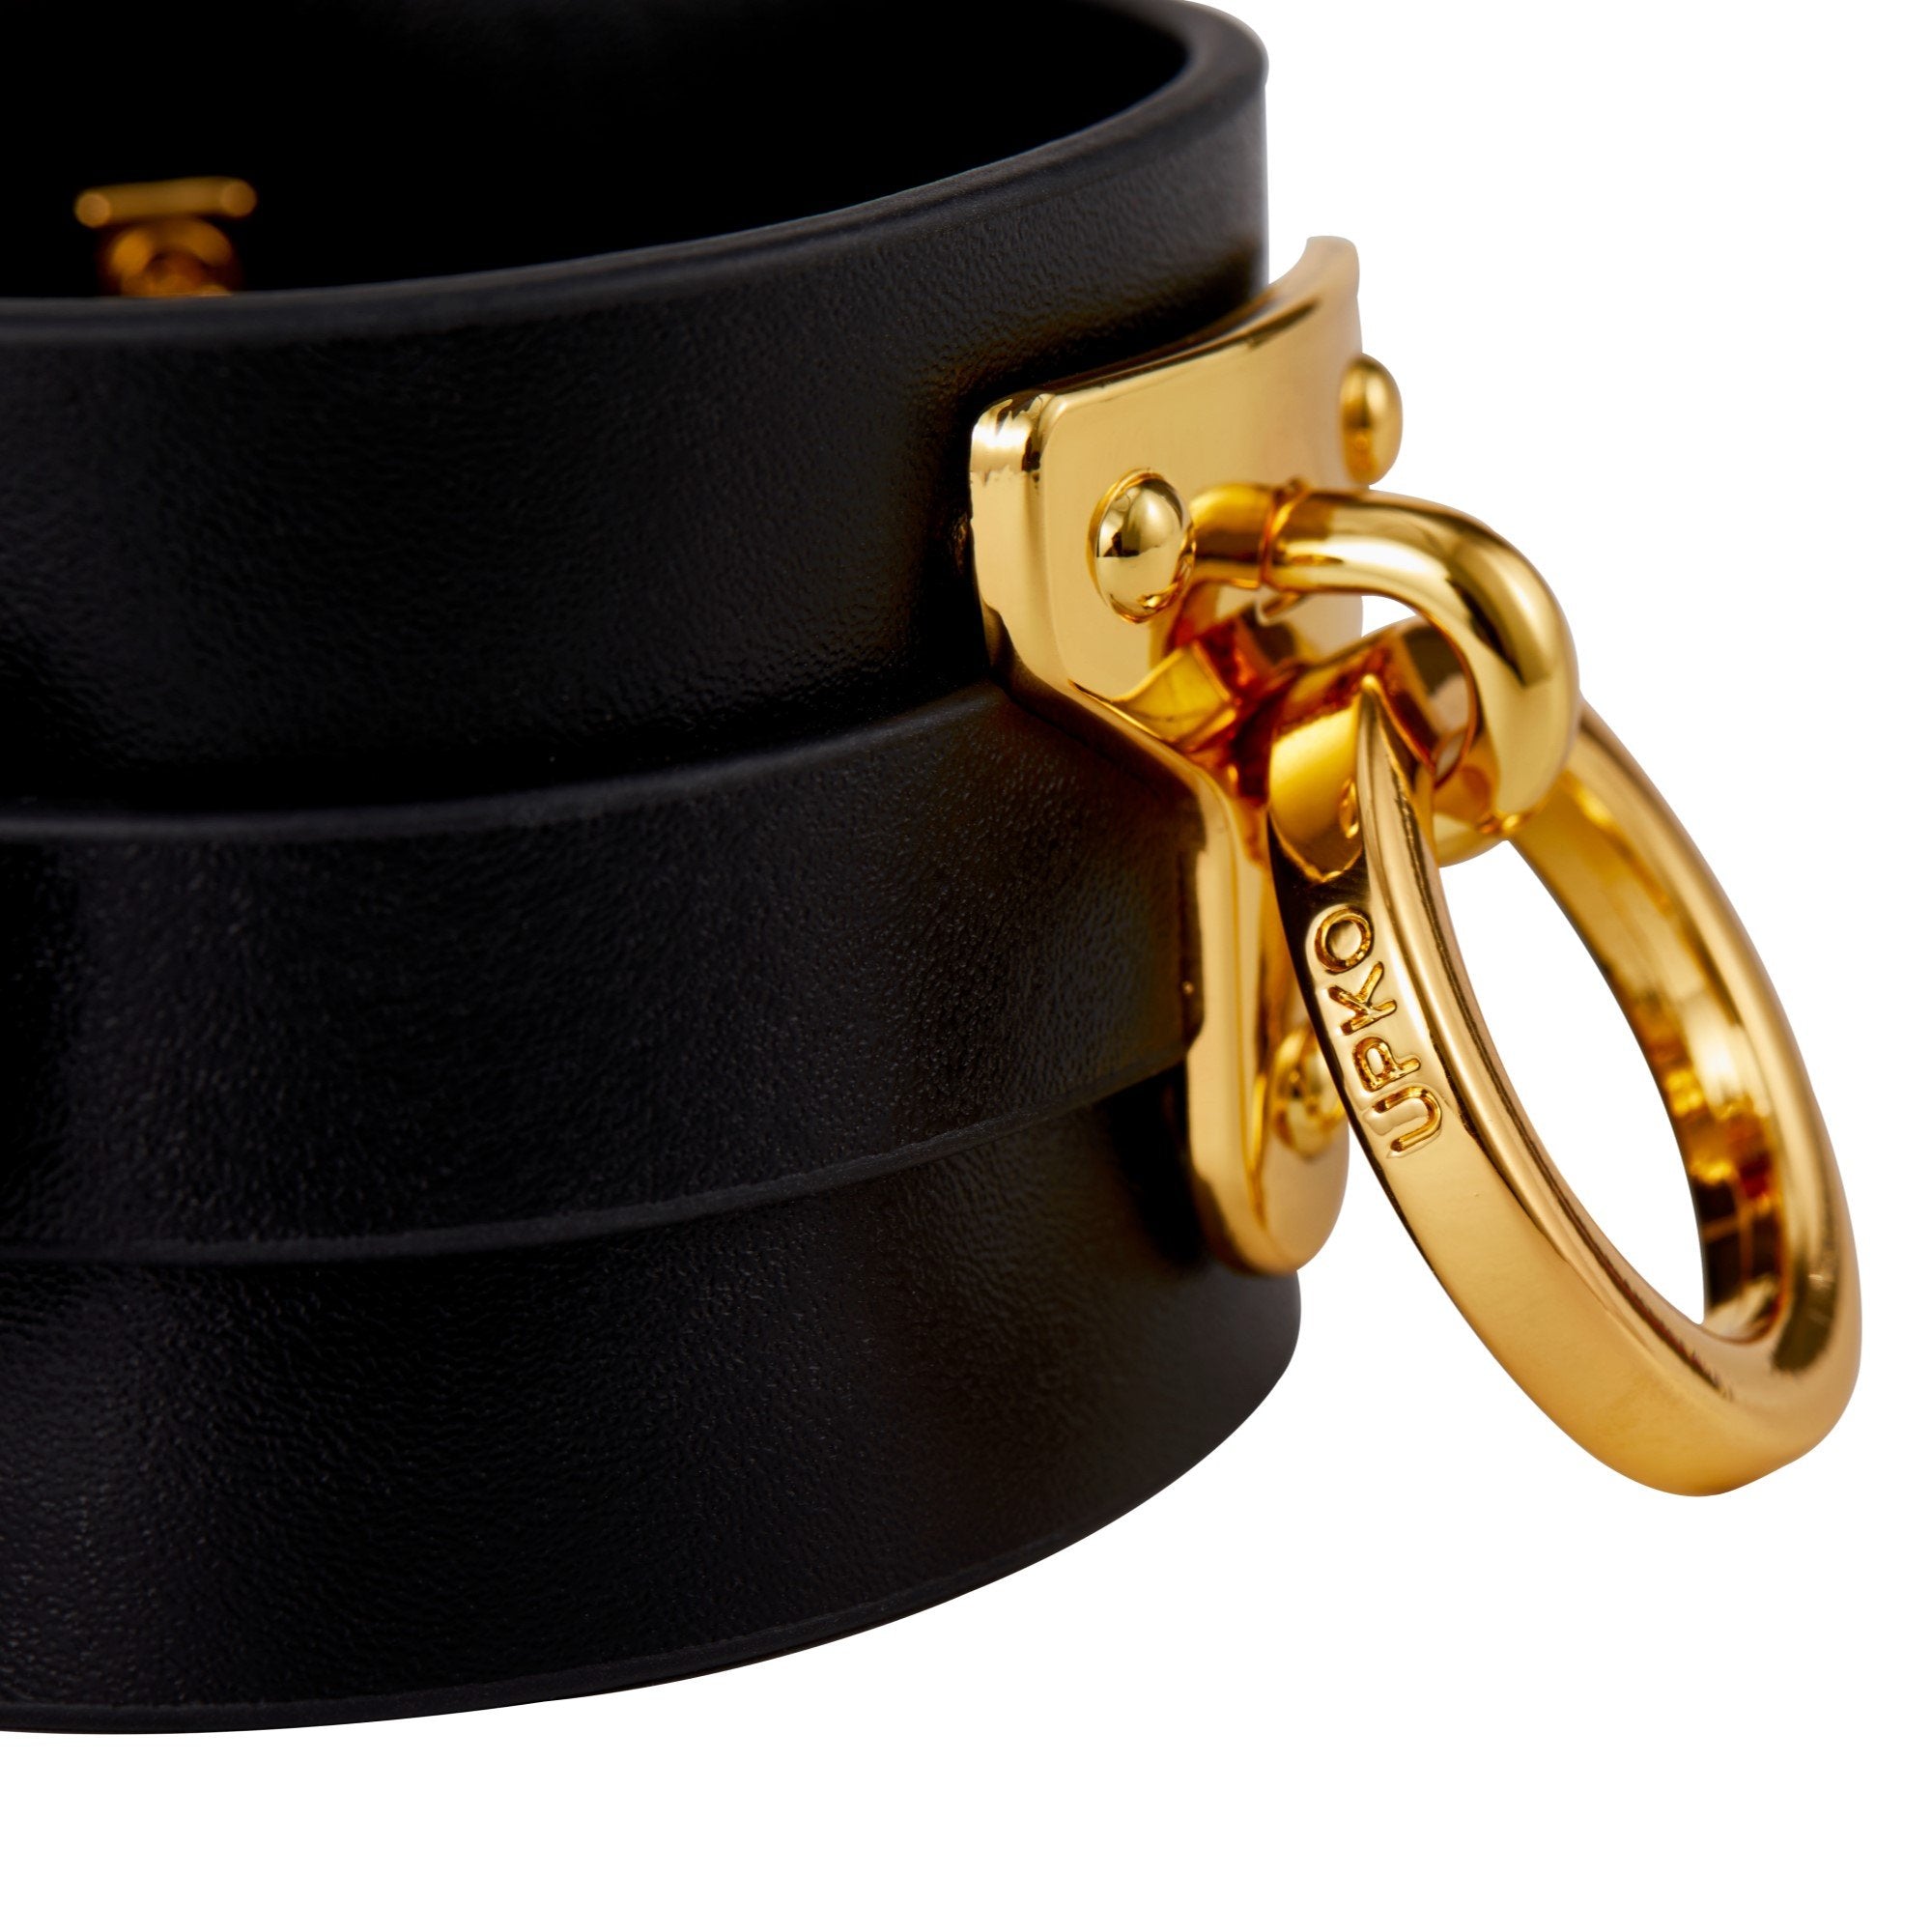 Luxury Italian Leather Handcuffs by UPKO